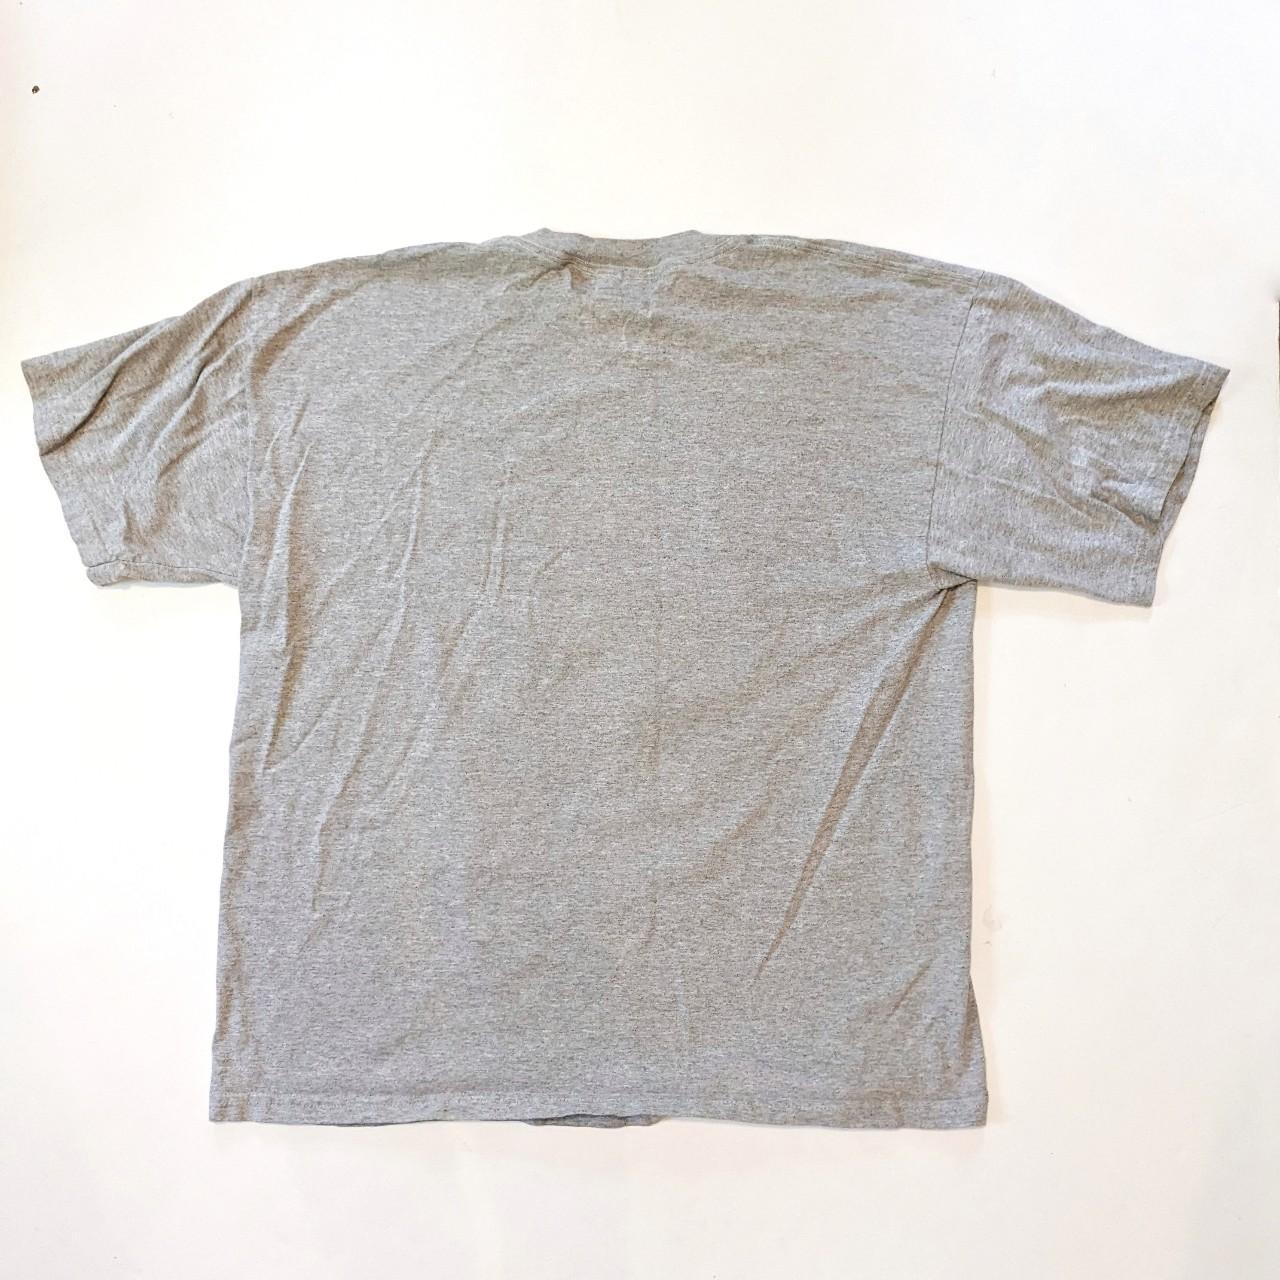 Vintage Bass Pro Shops Spring Fishing T-Shirt (1990s) 8670